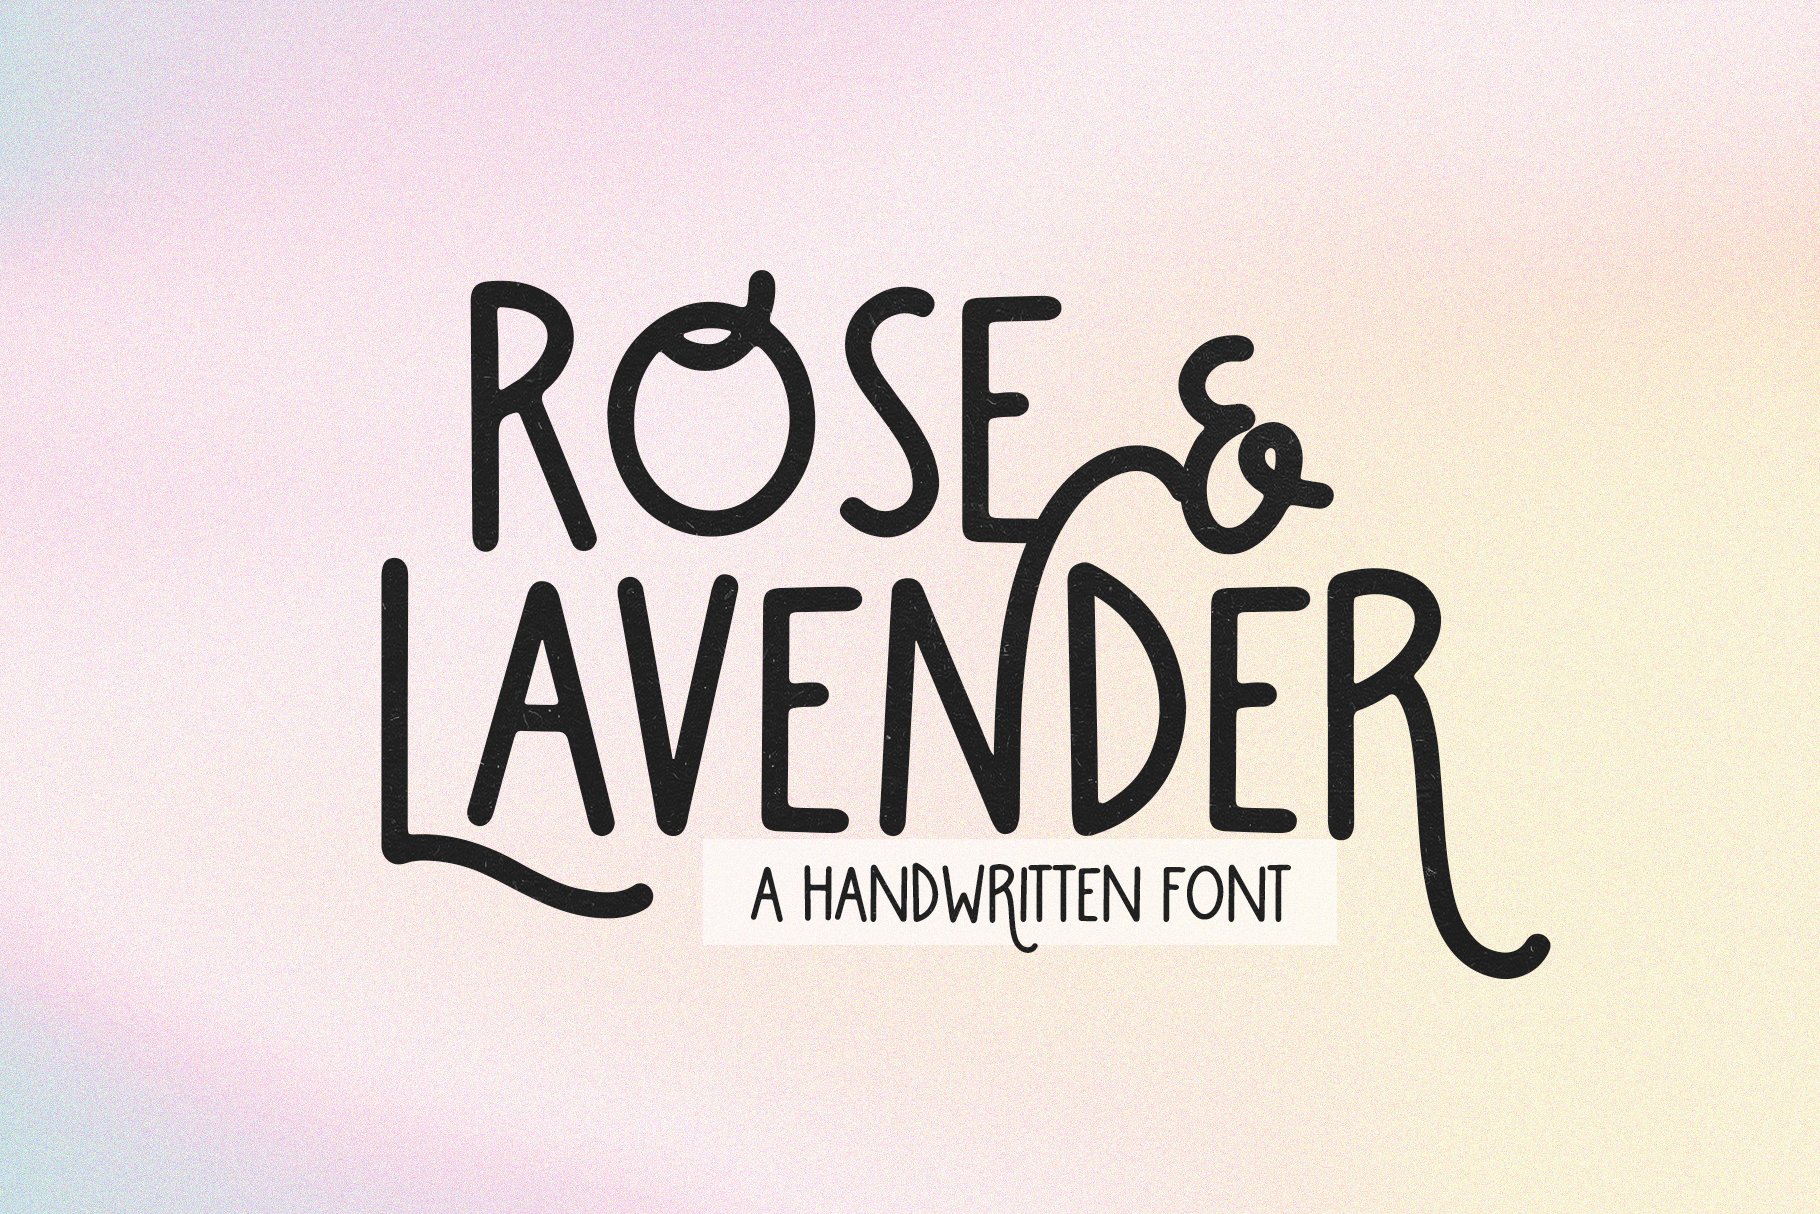 Rose & Lavender | Handwritten Font cover image.